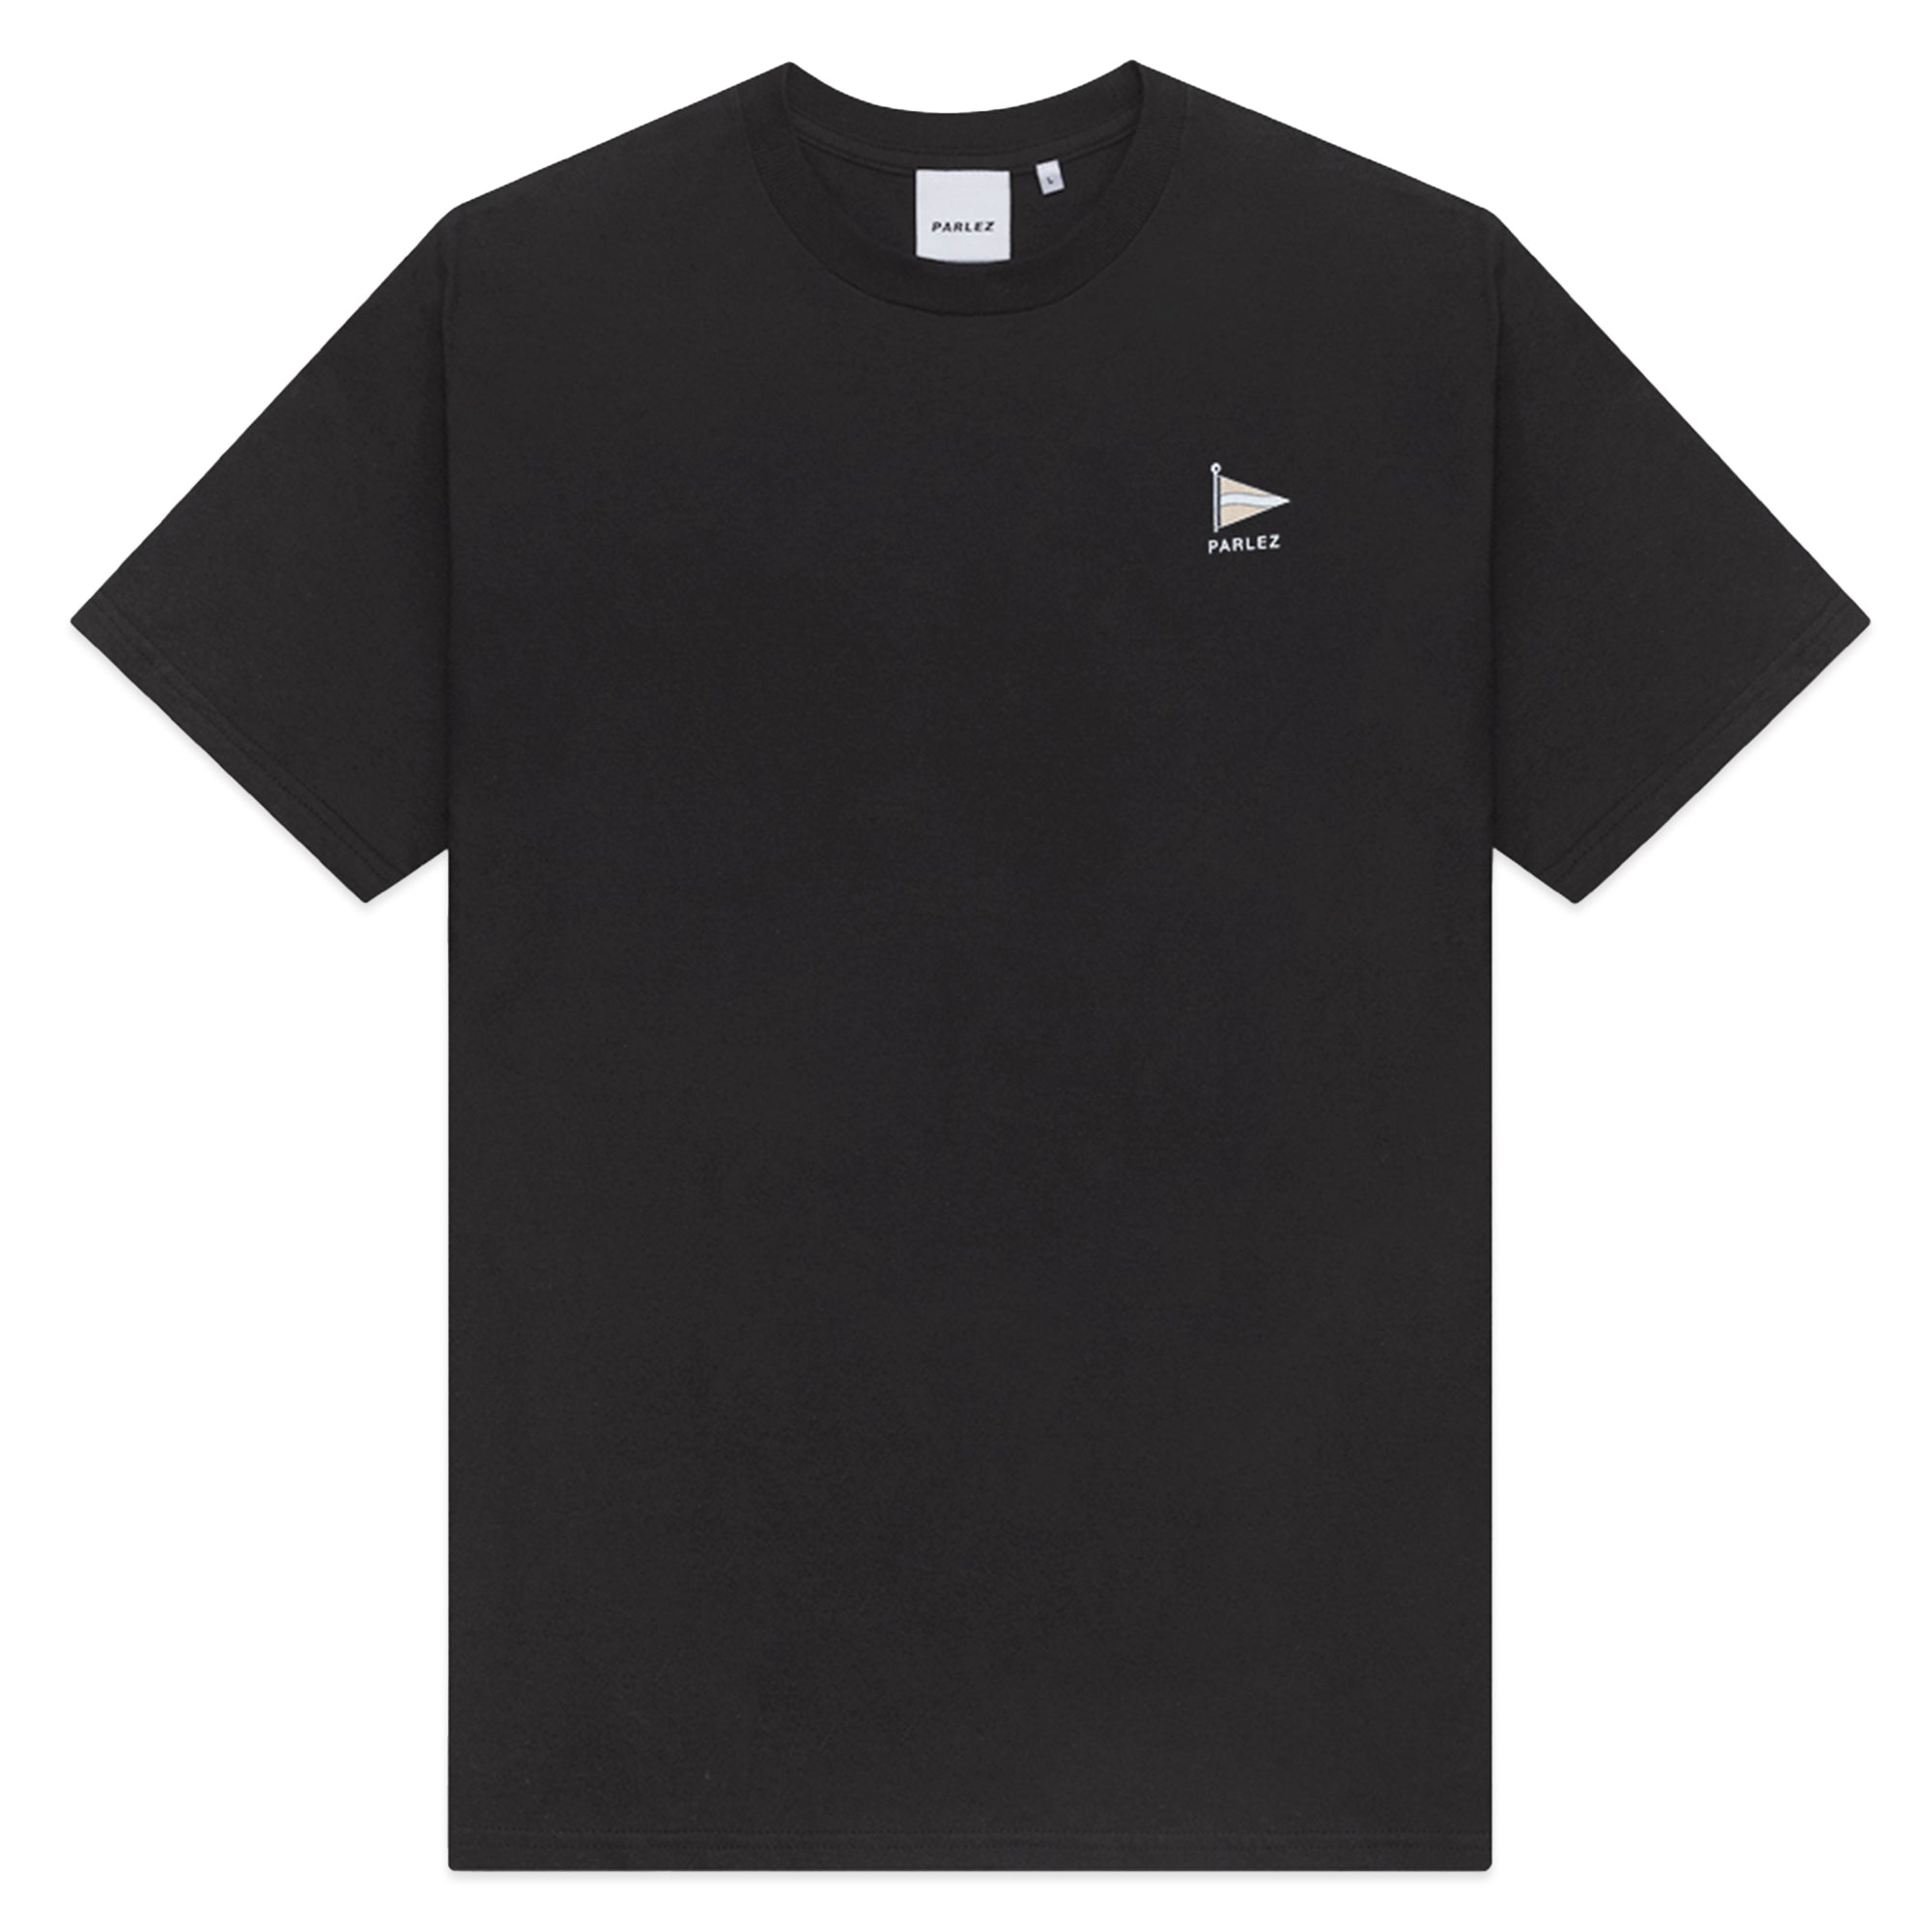 Parlez Holman T-Shirt - Black